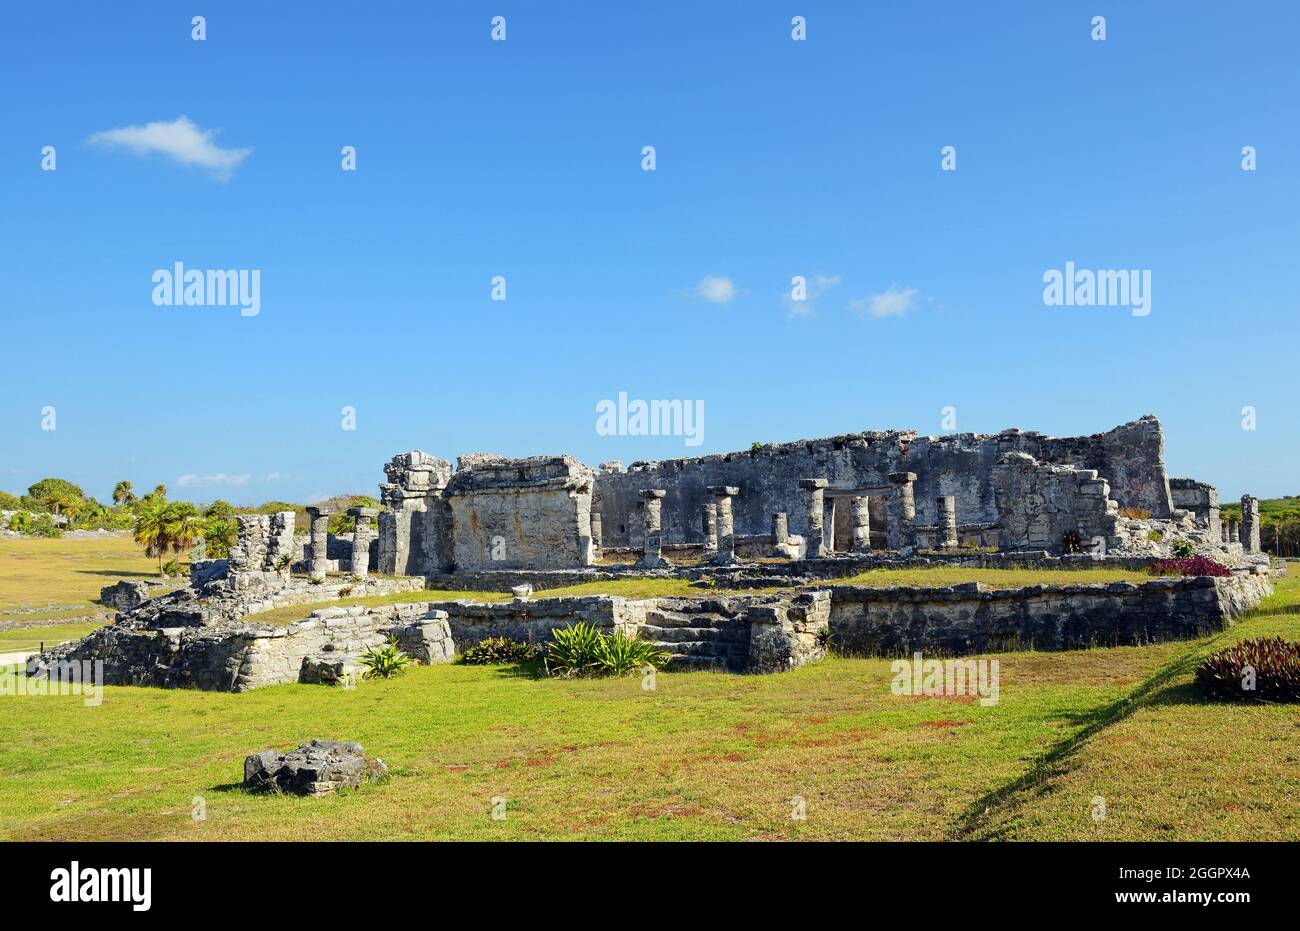 Ancient temple ruins in Tulum, Yucatan, Mexico. Stock Photo